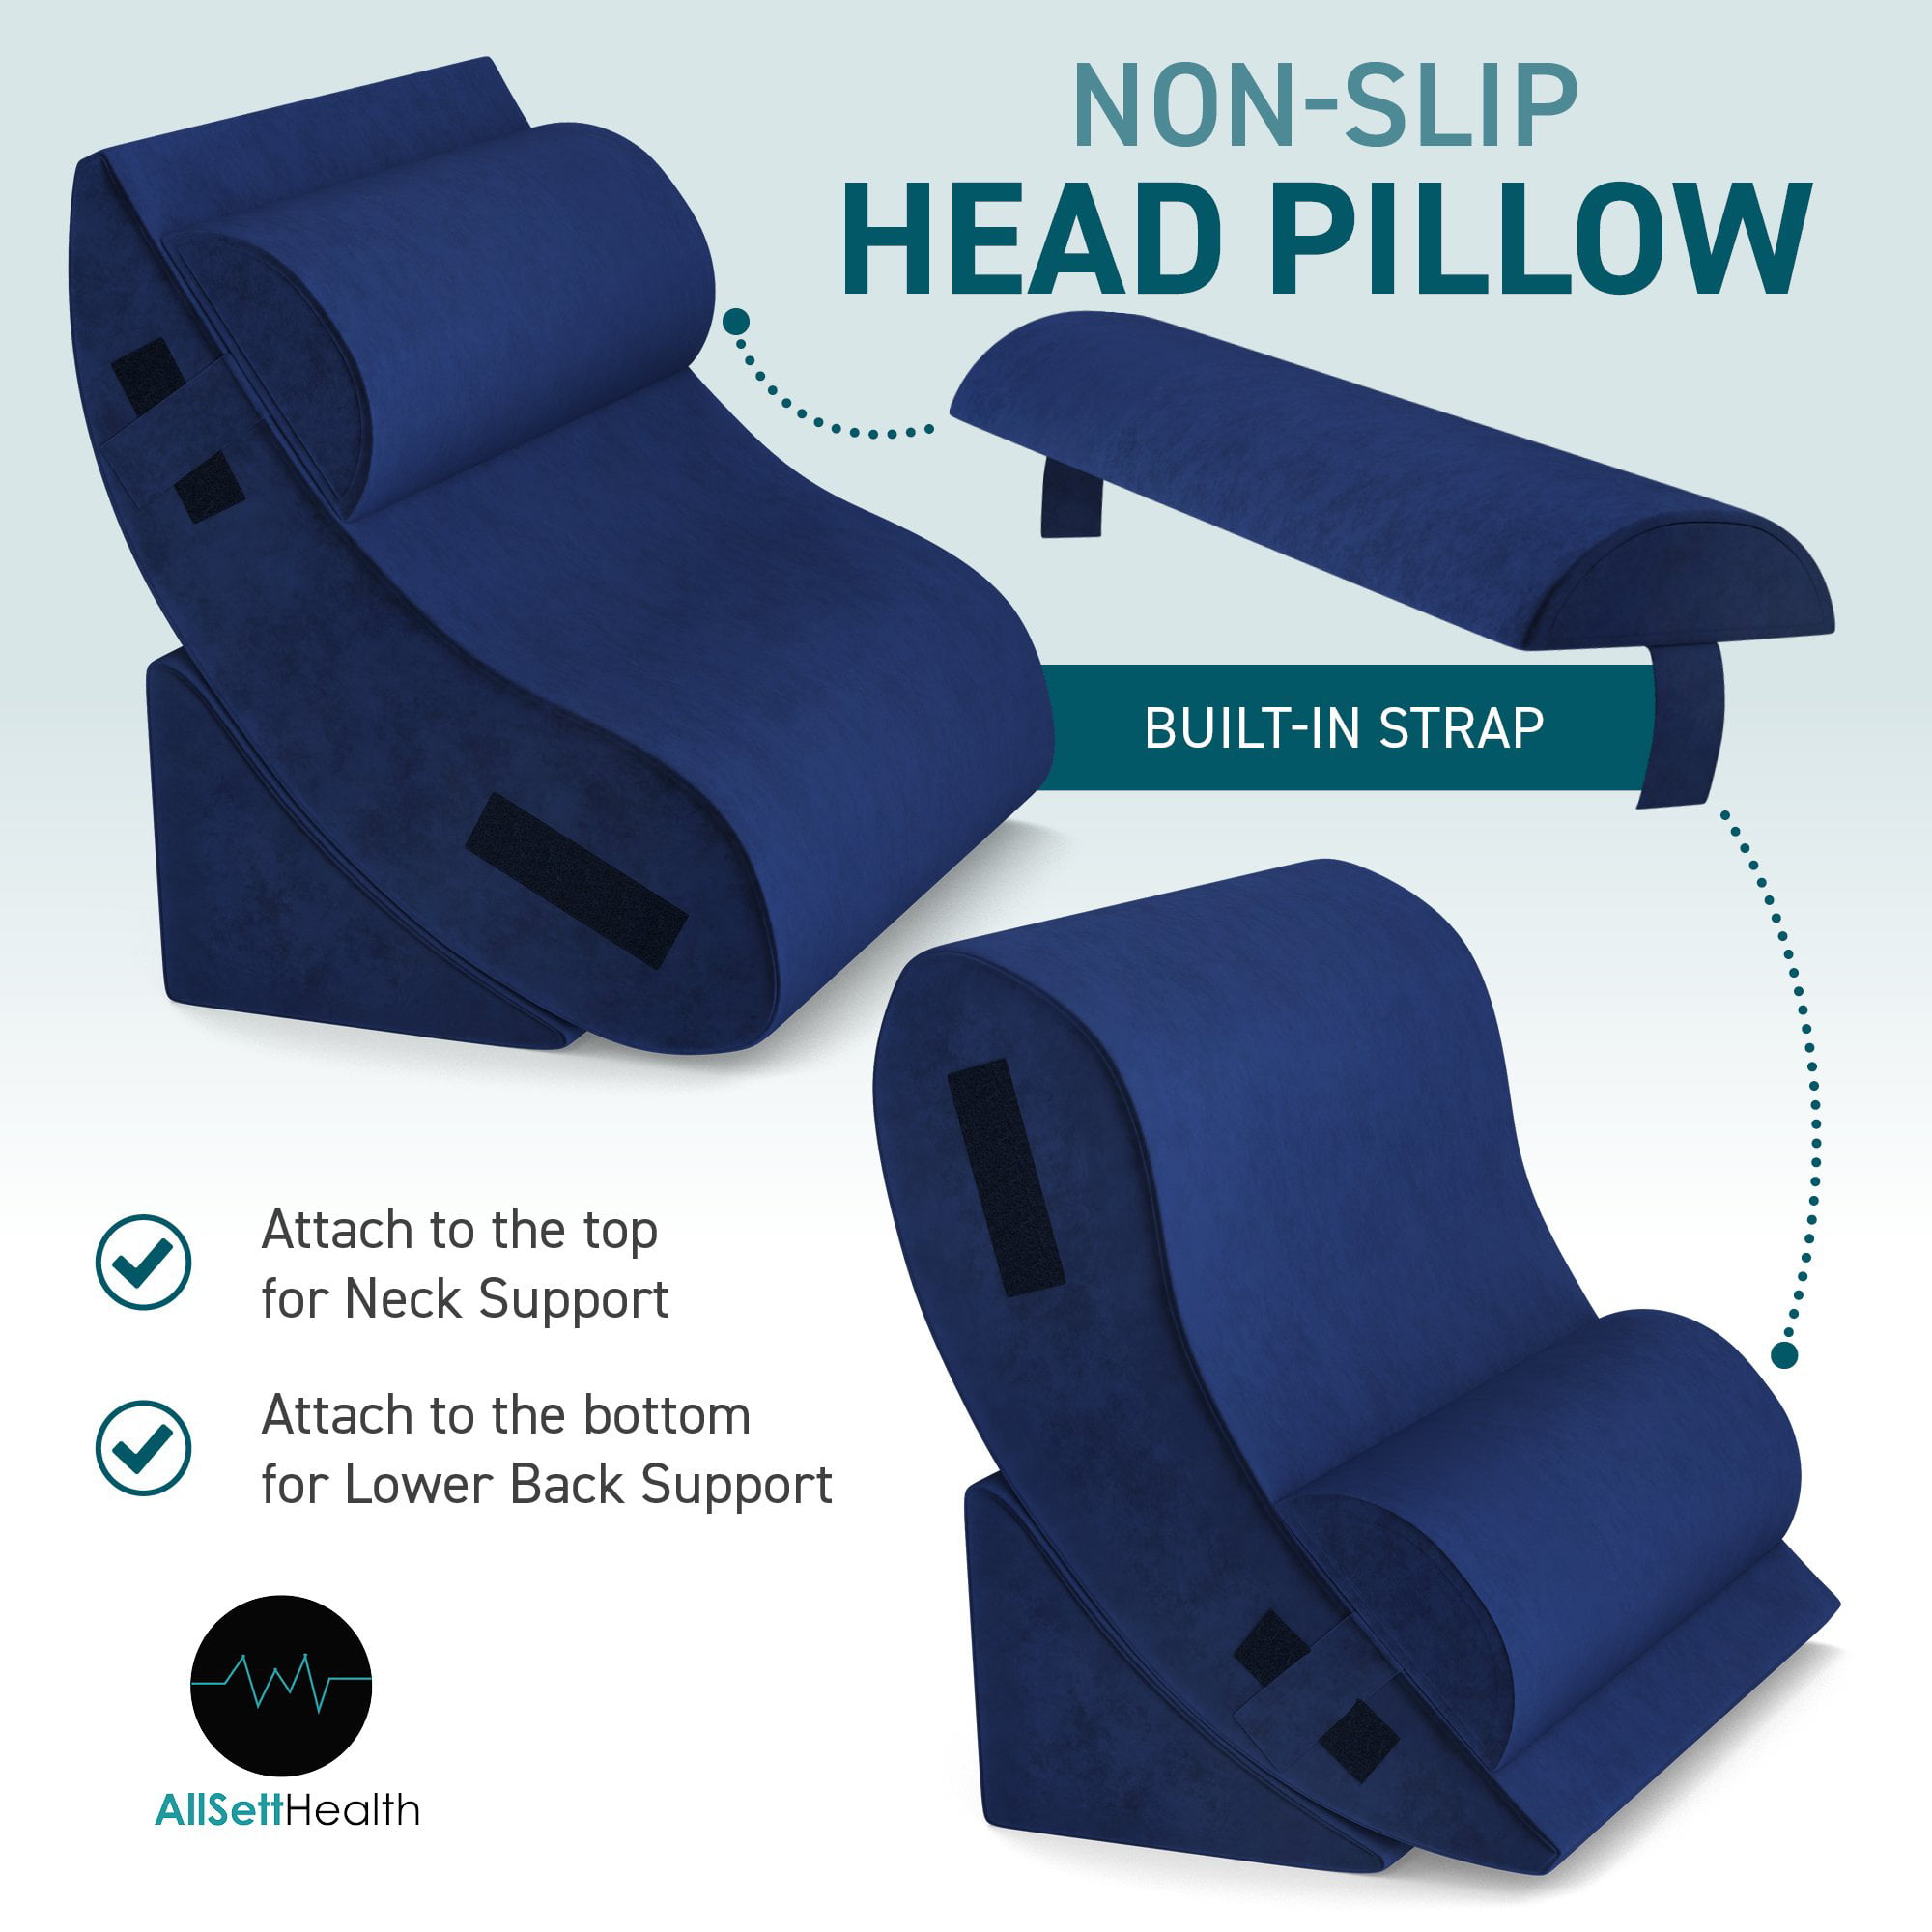 Flexicomfort Memory Foam Wedge Pillow for Sleeping with Adjustable